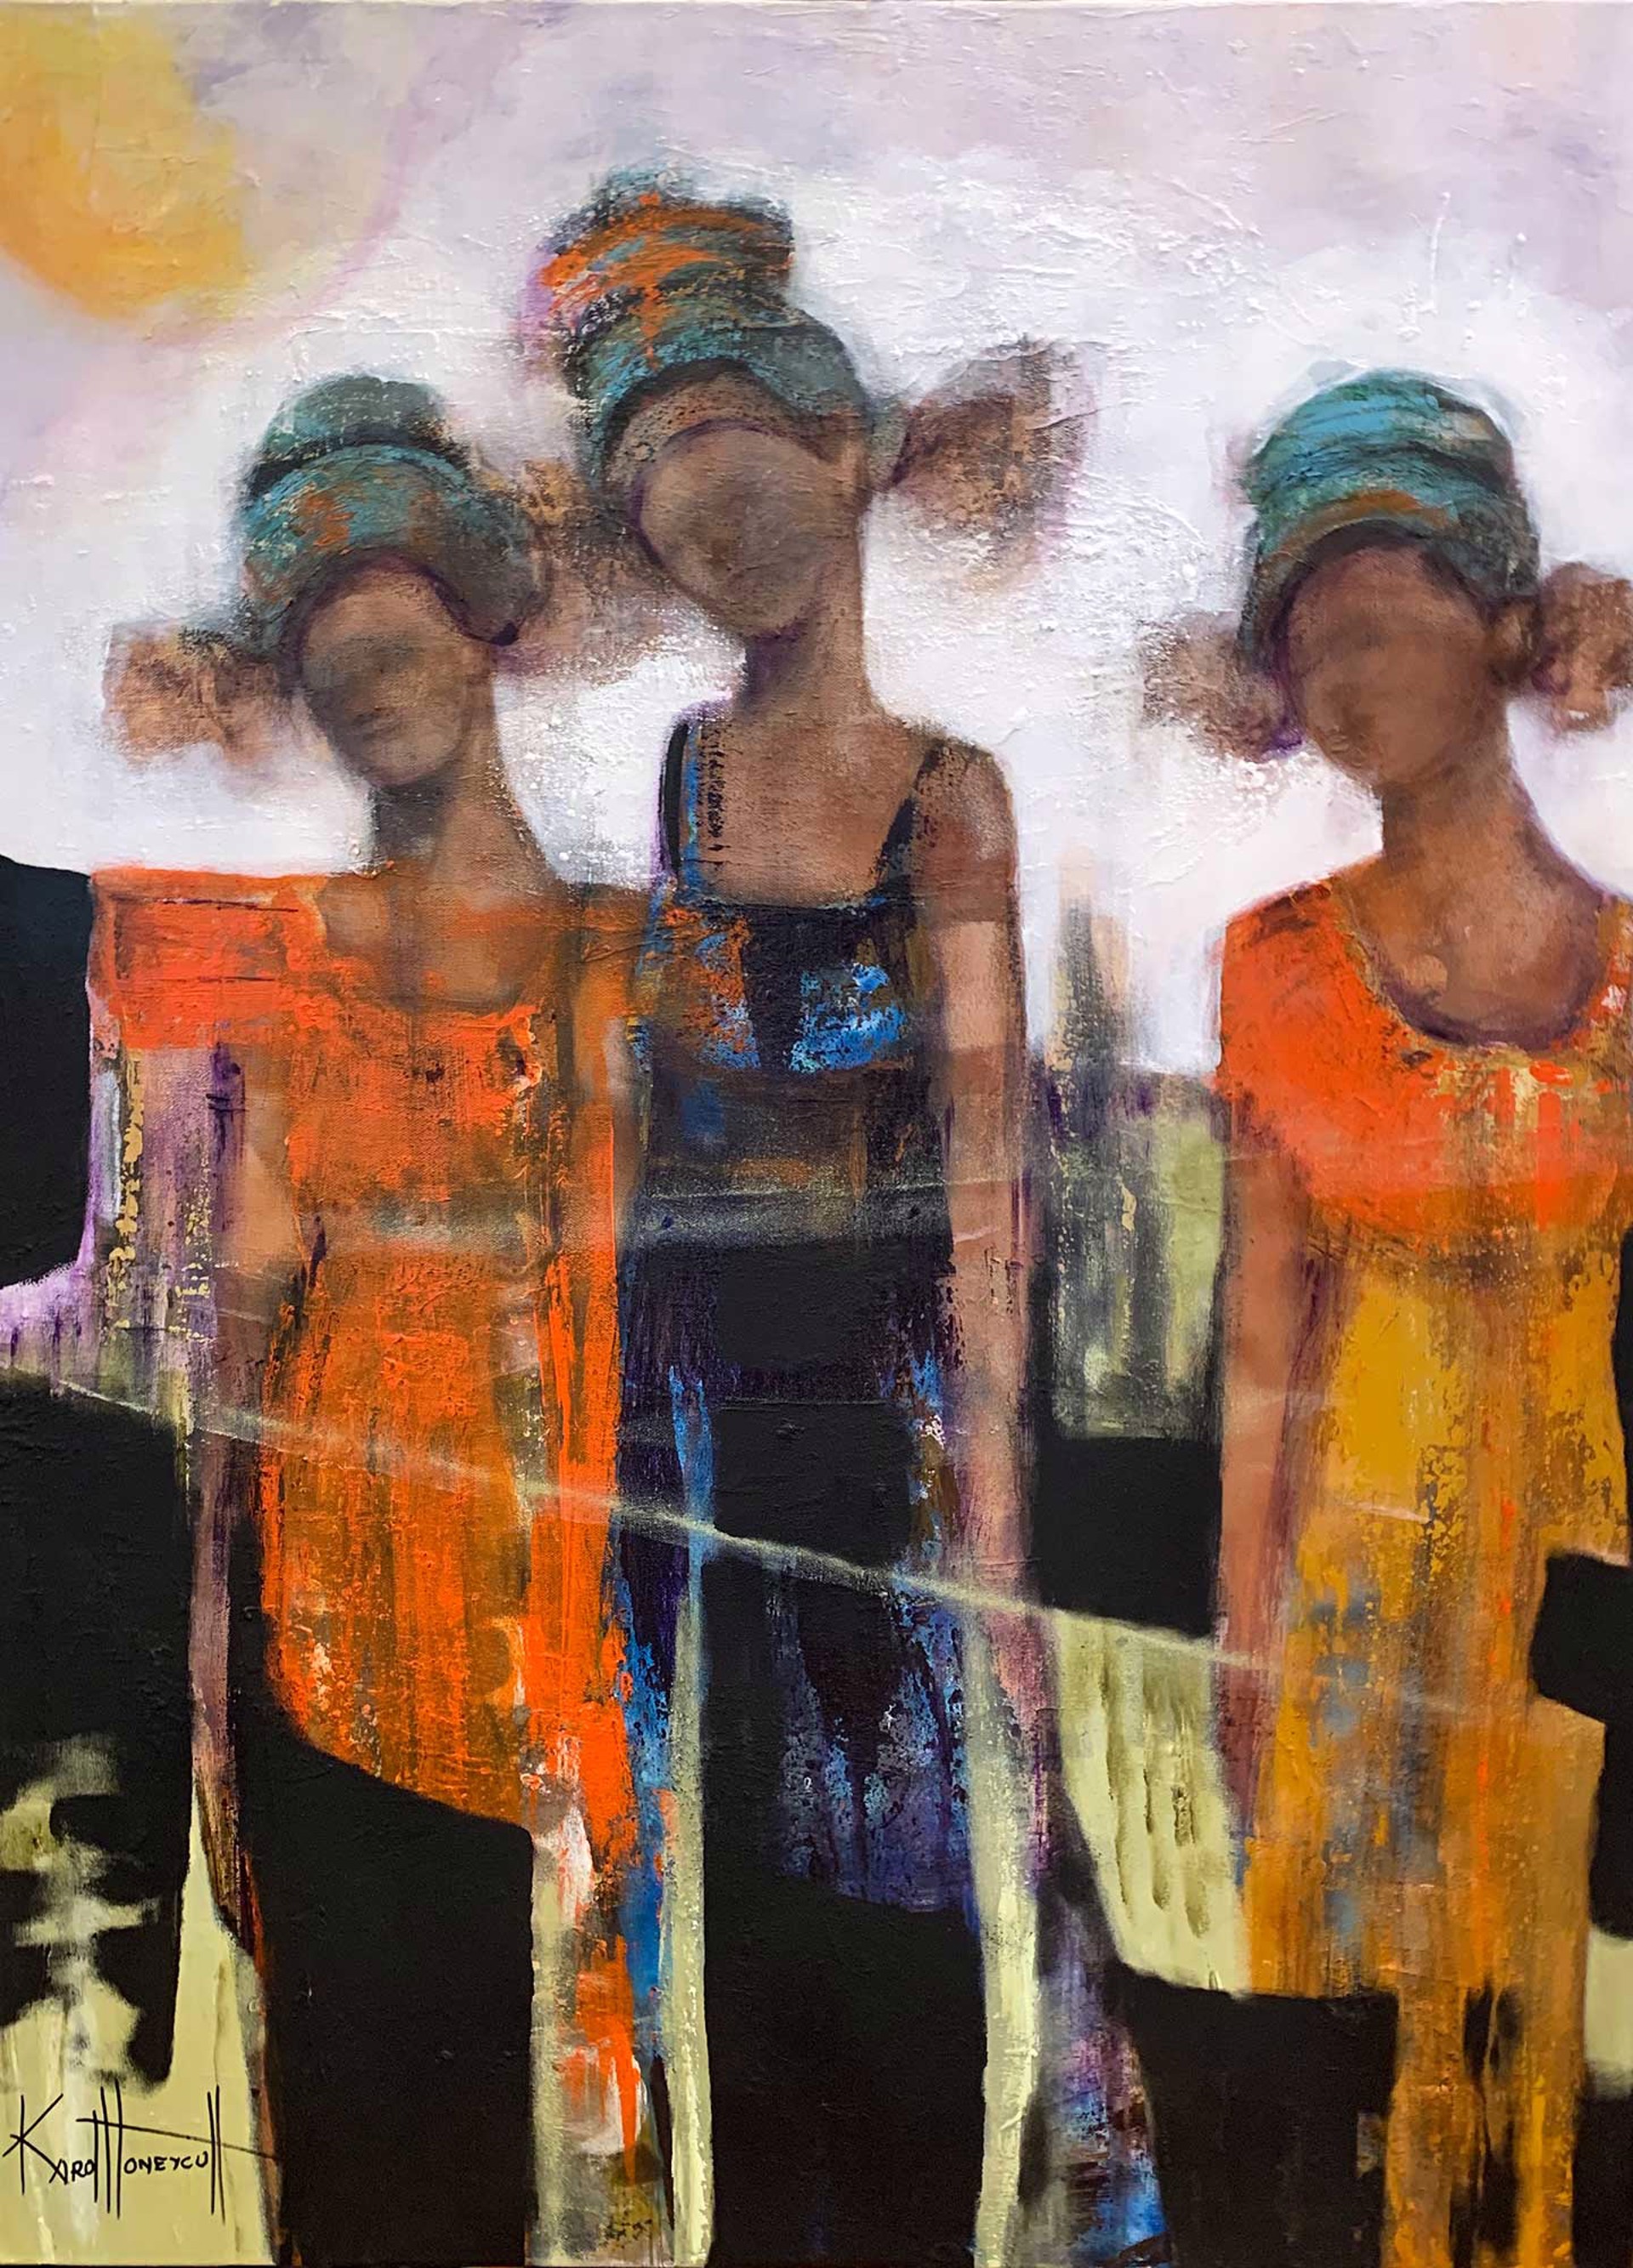 Three Turbans by Karol Honeycutt